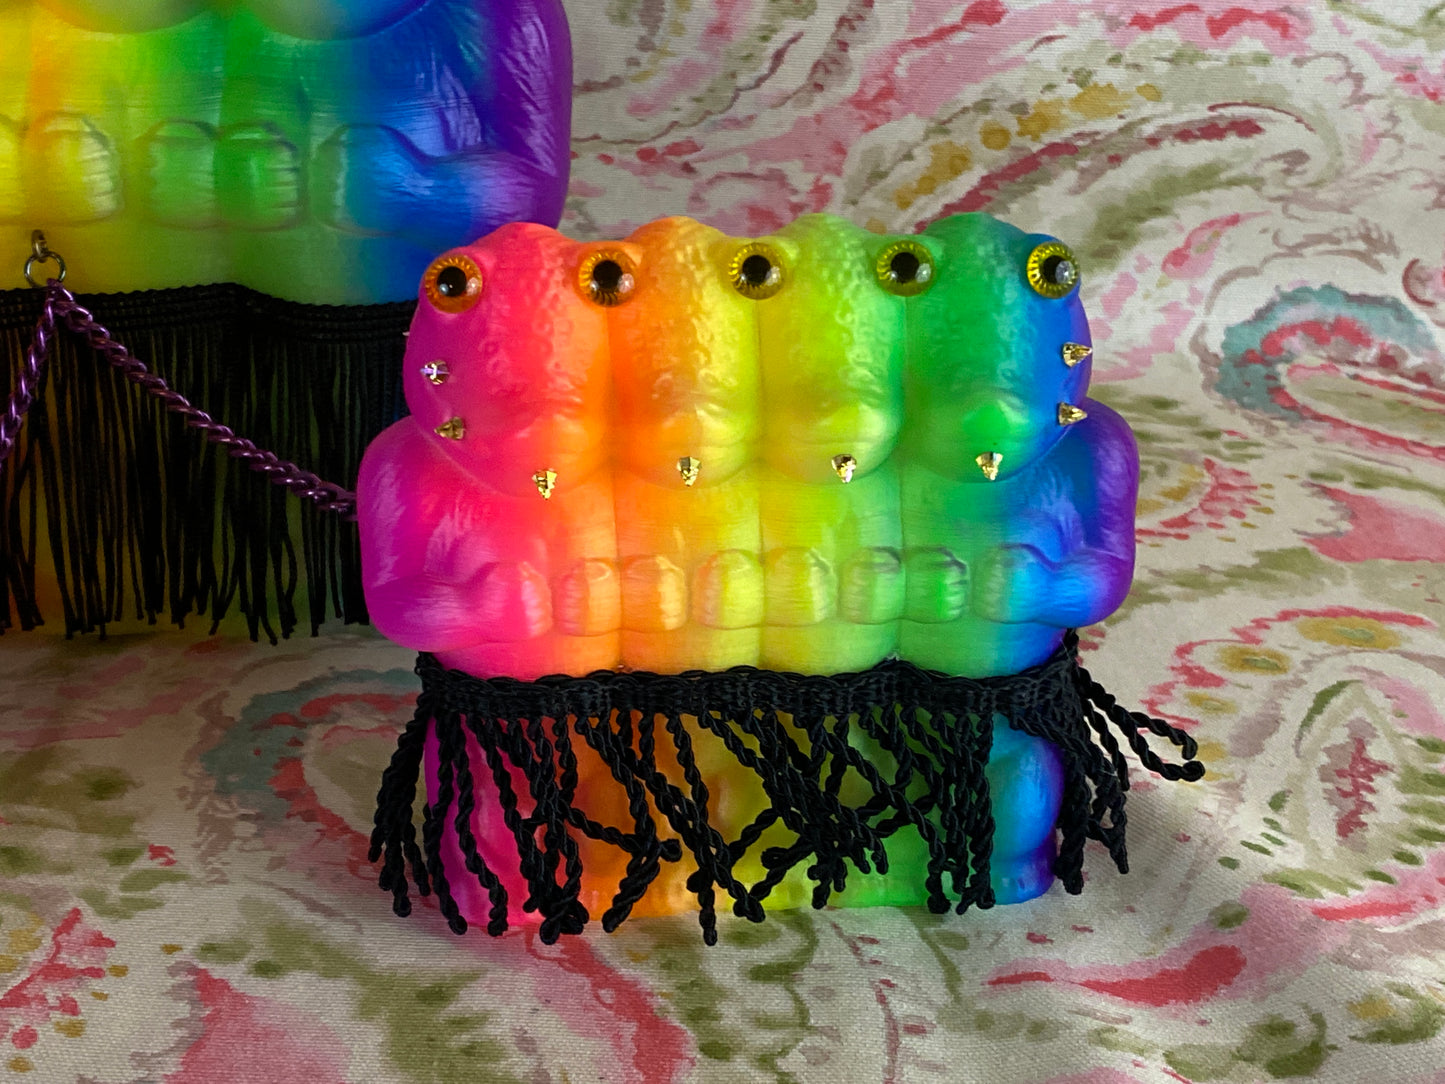 Crocodile Ape Cult: Triple Chained 4 Headed Neon Rainbow Coalition